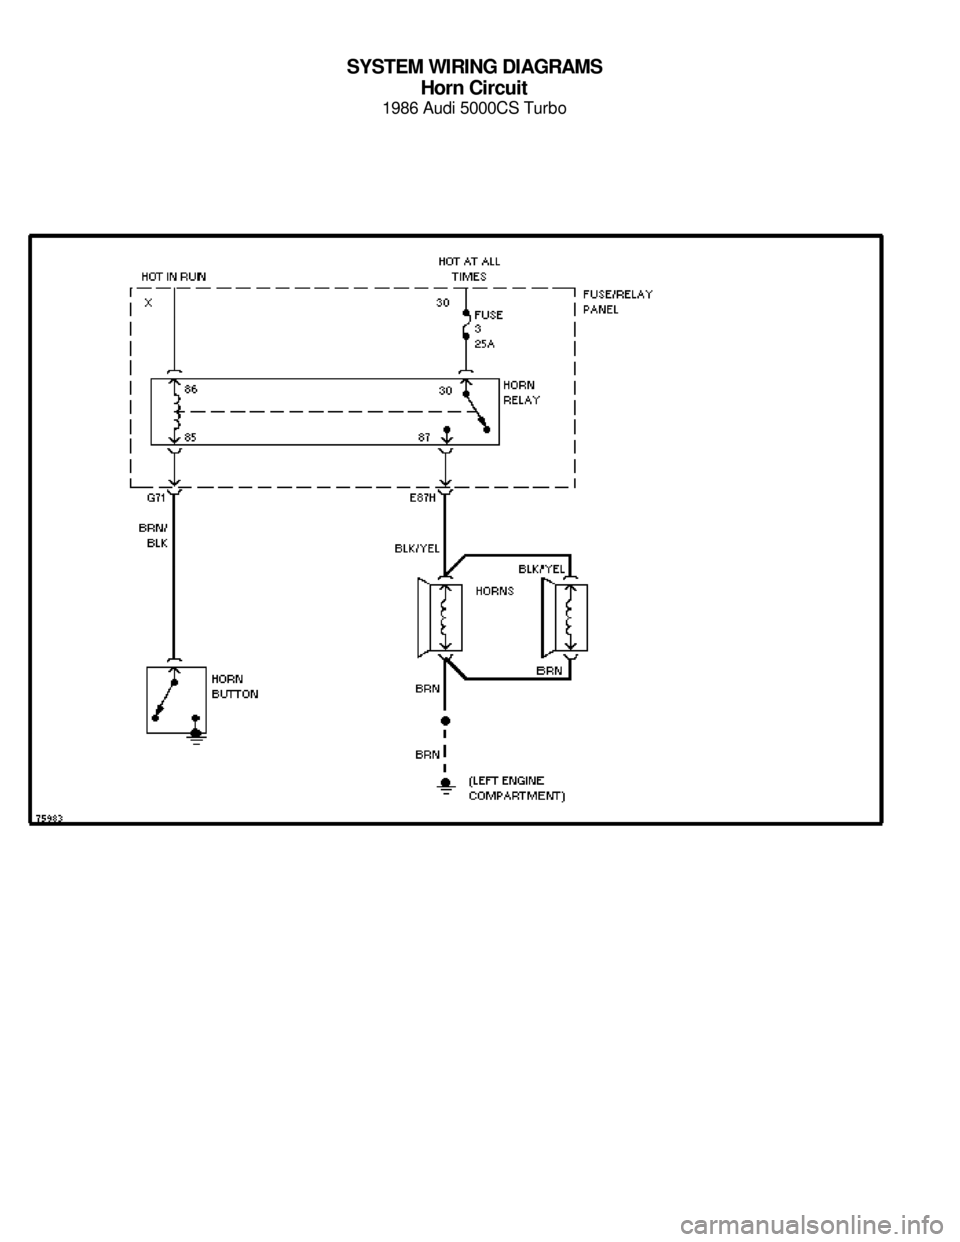 AUDI 5000CS 1986 C2 System Wiring Diagram SYSTEM WIRING DIAGRAMS
Horn Circuit
1986 Audi 5000CS Turbo
For x    
Copyright © 1998 Mitchell Repair Information Company, LLCMonday, July 19, 2004  05:52PM 